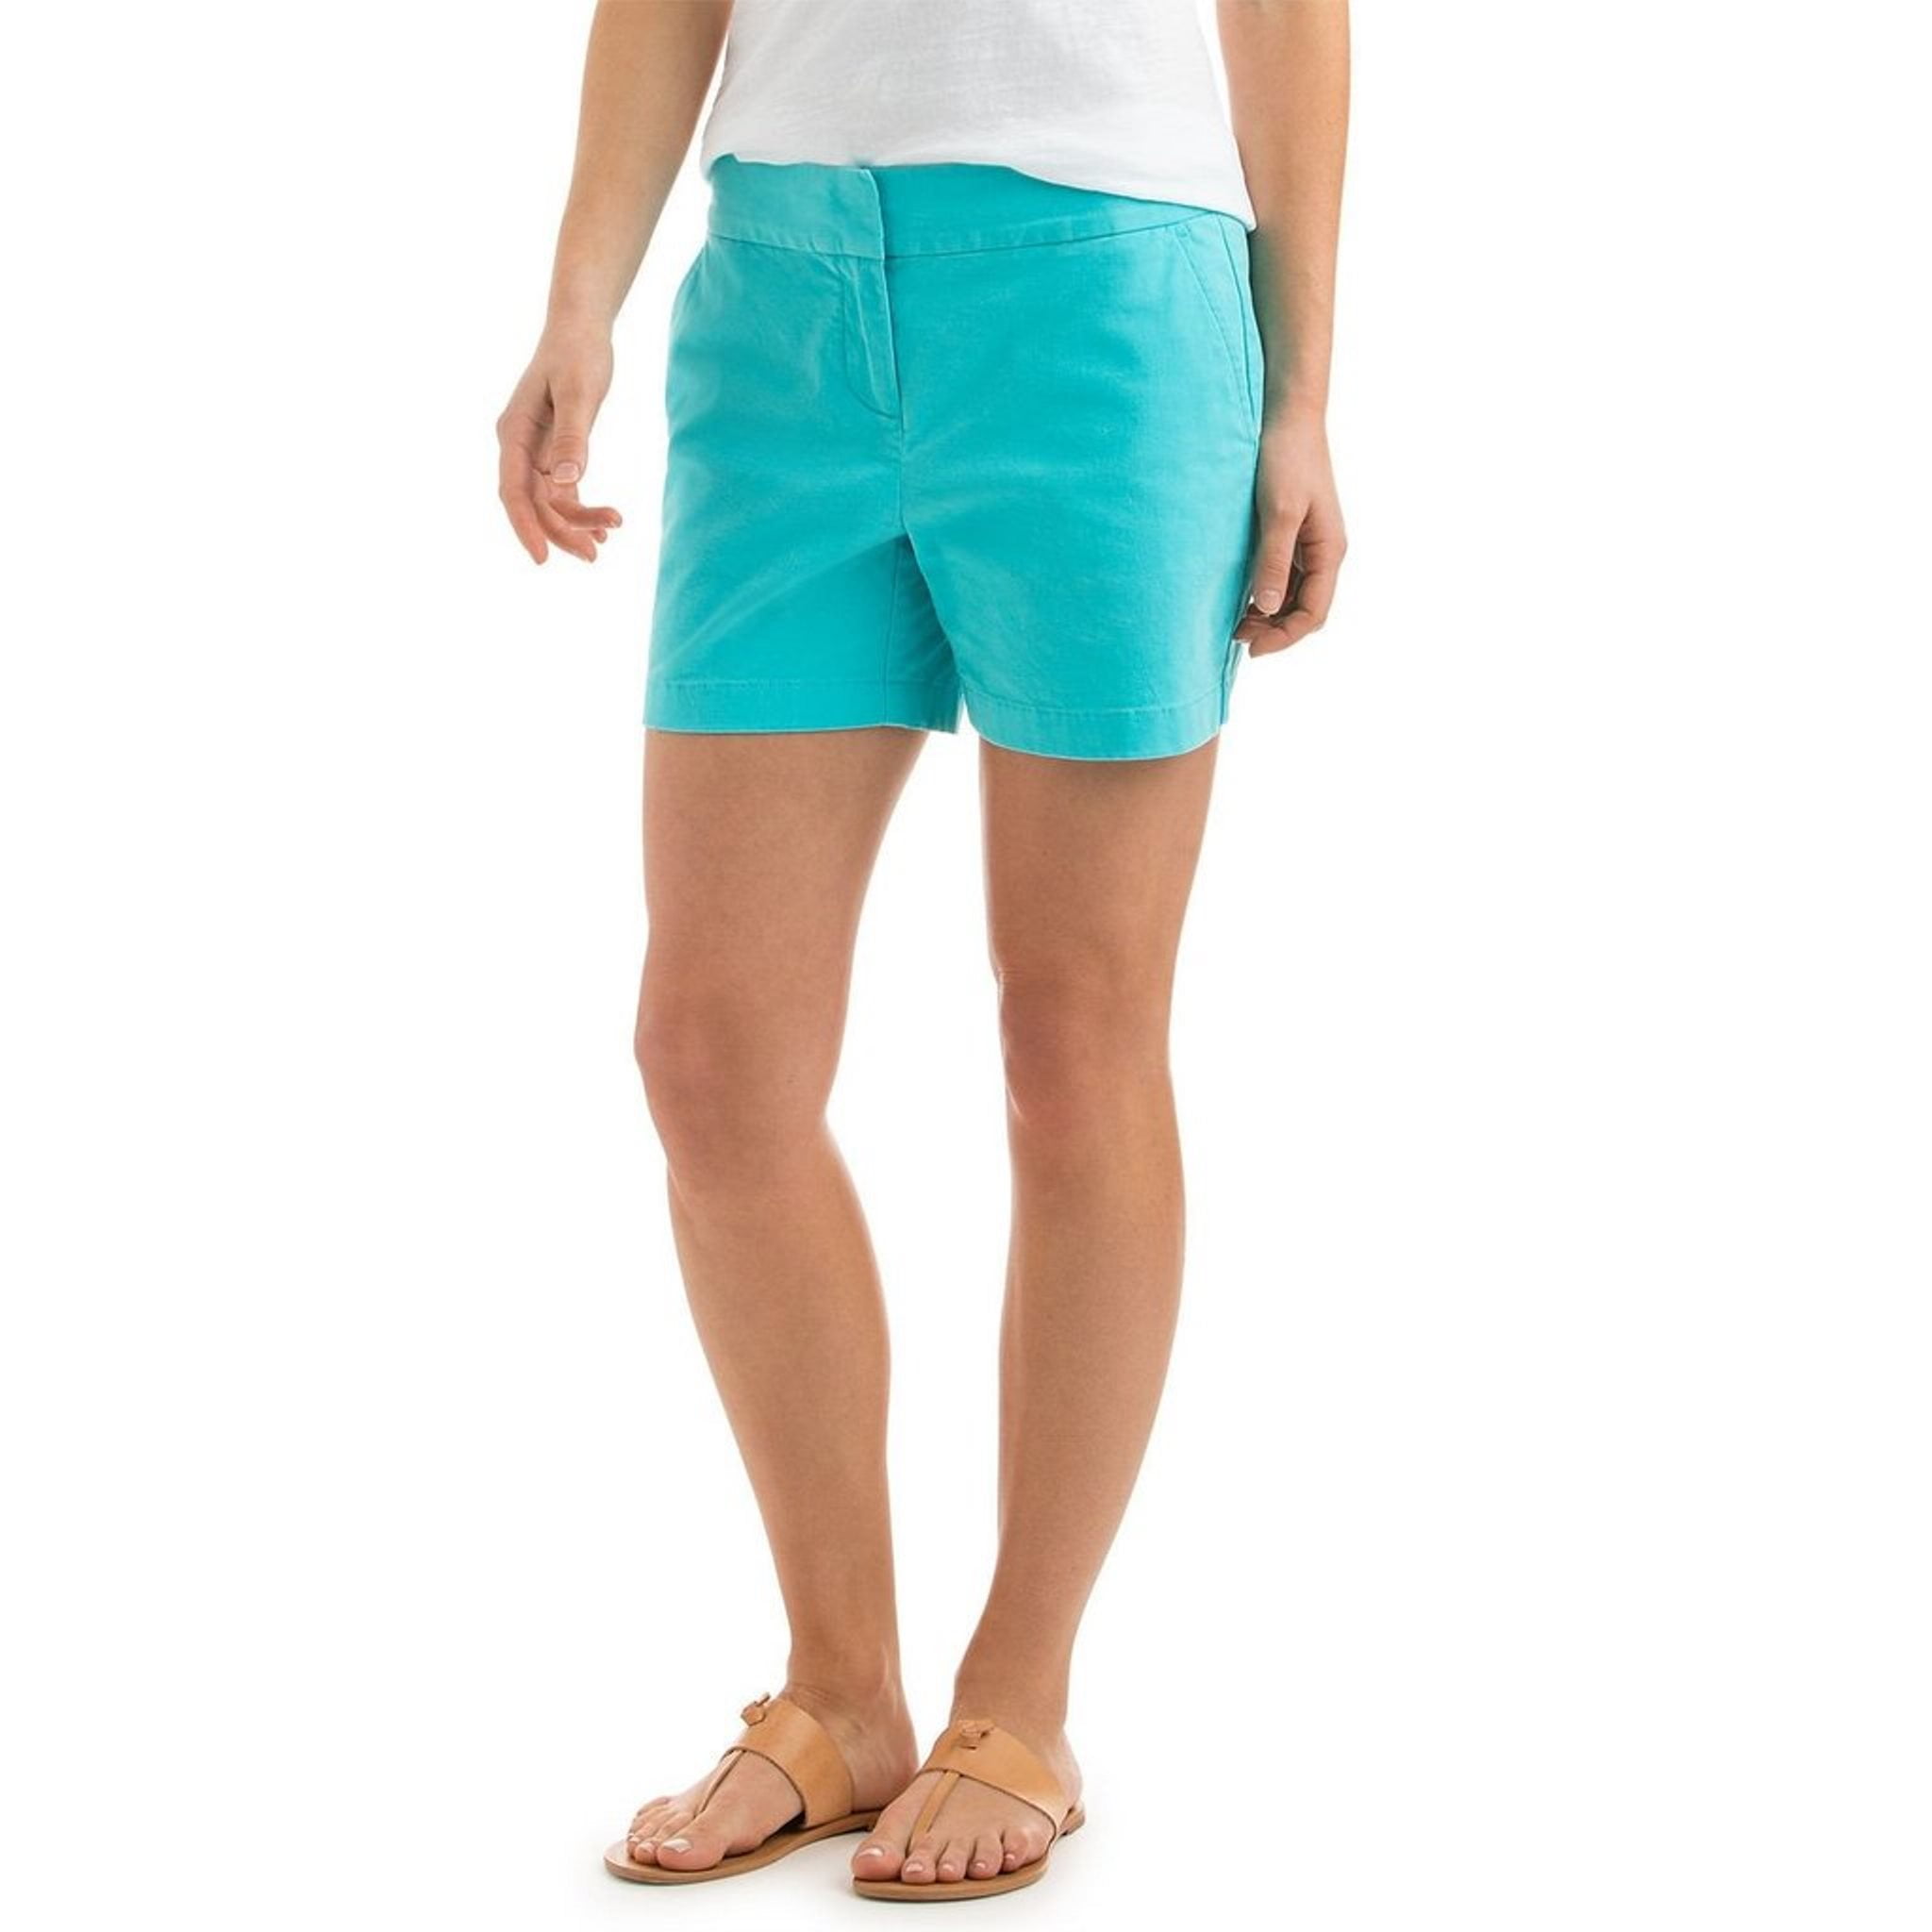 womens shorts 5 inch inseam